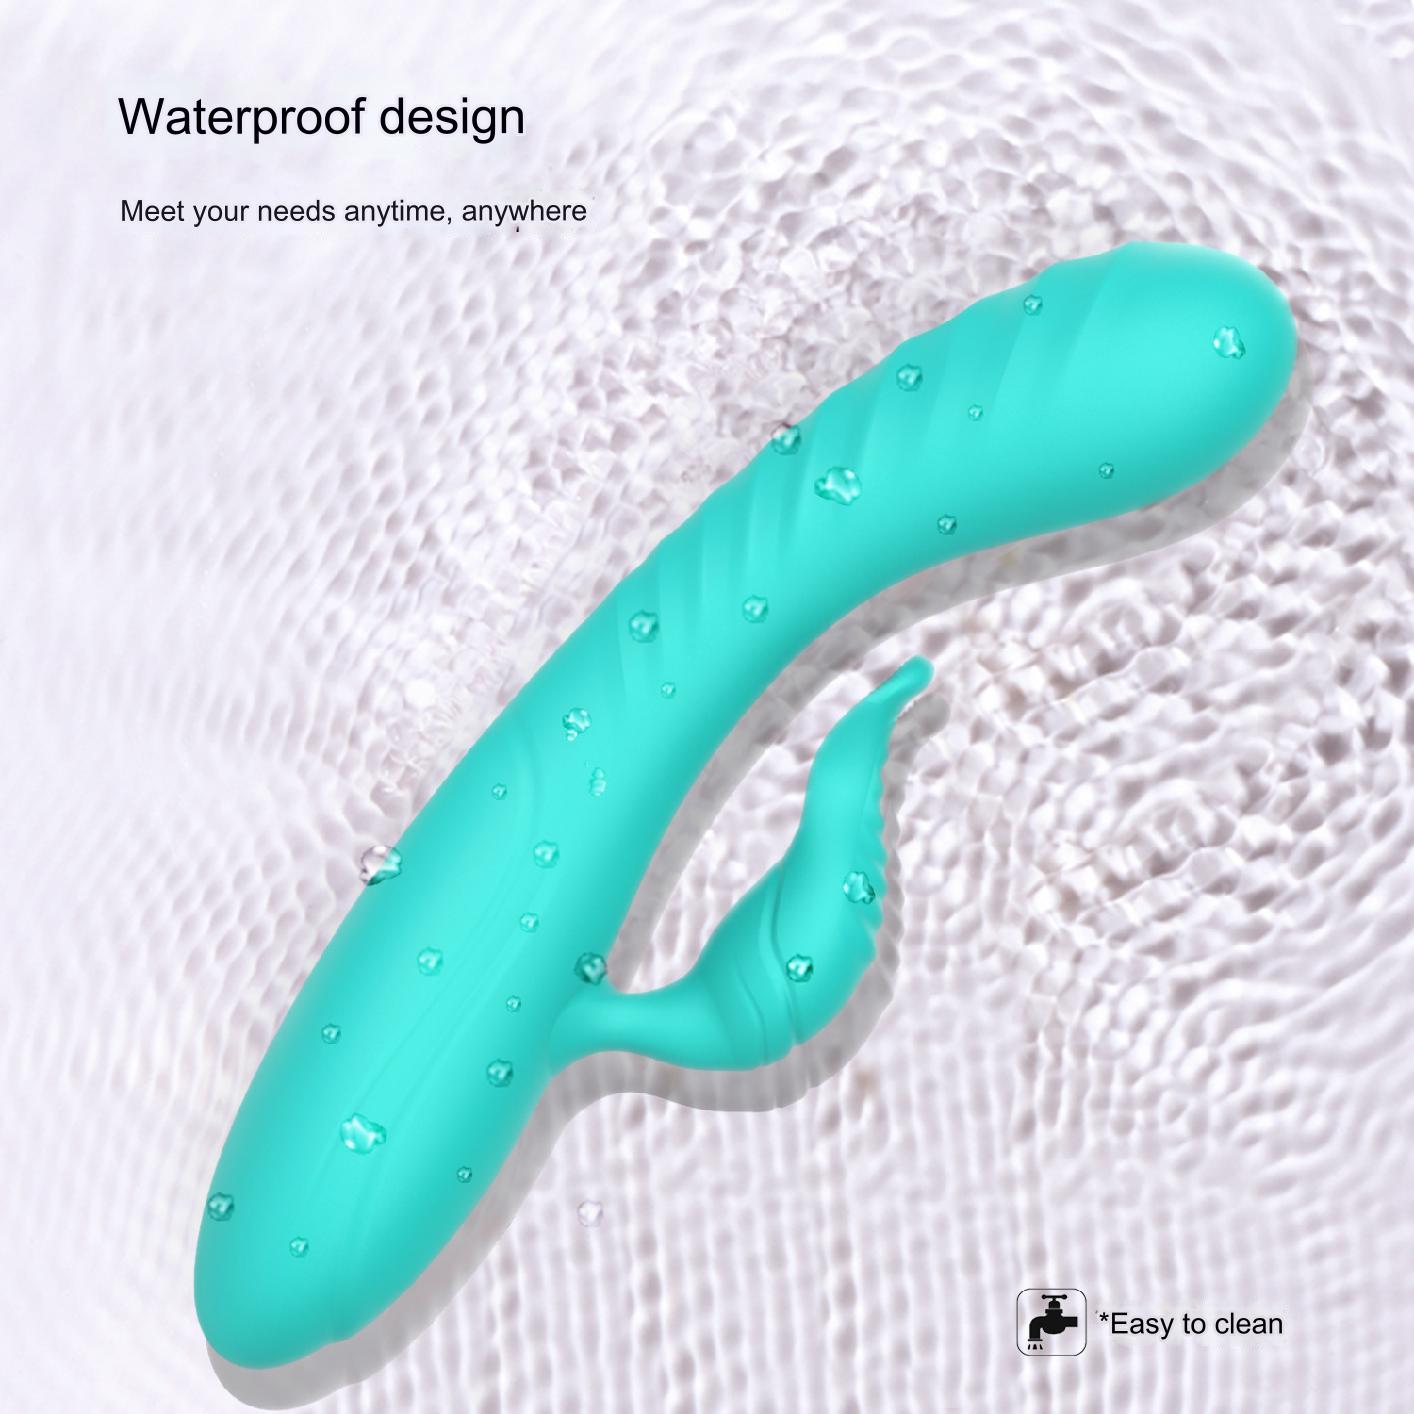 Waterproof Round Liquid Silicone Octopus Vibrator